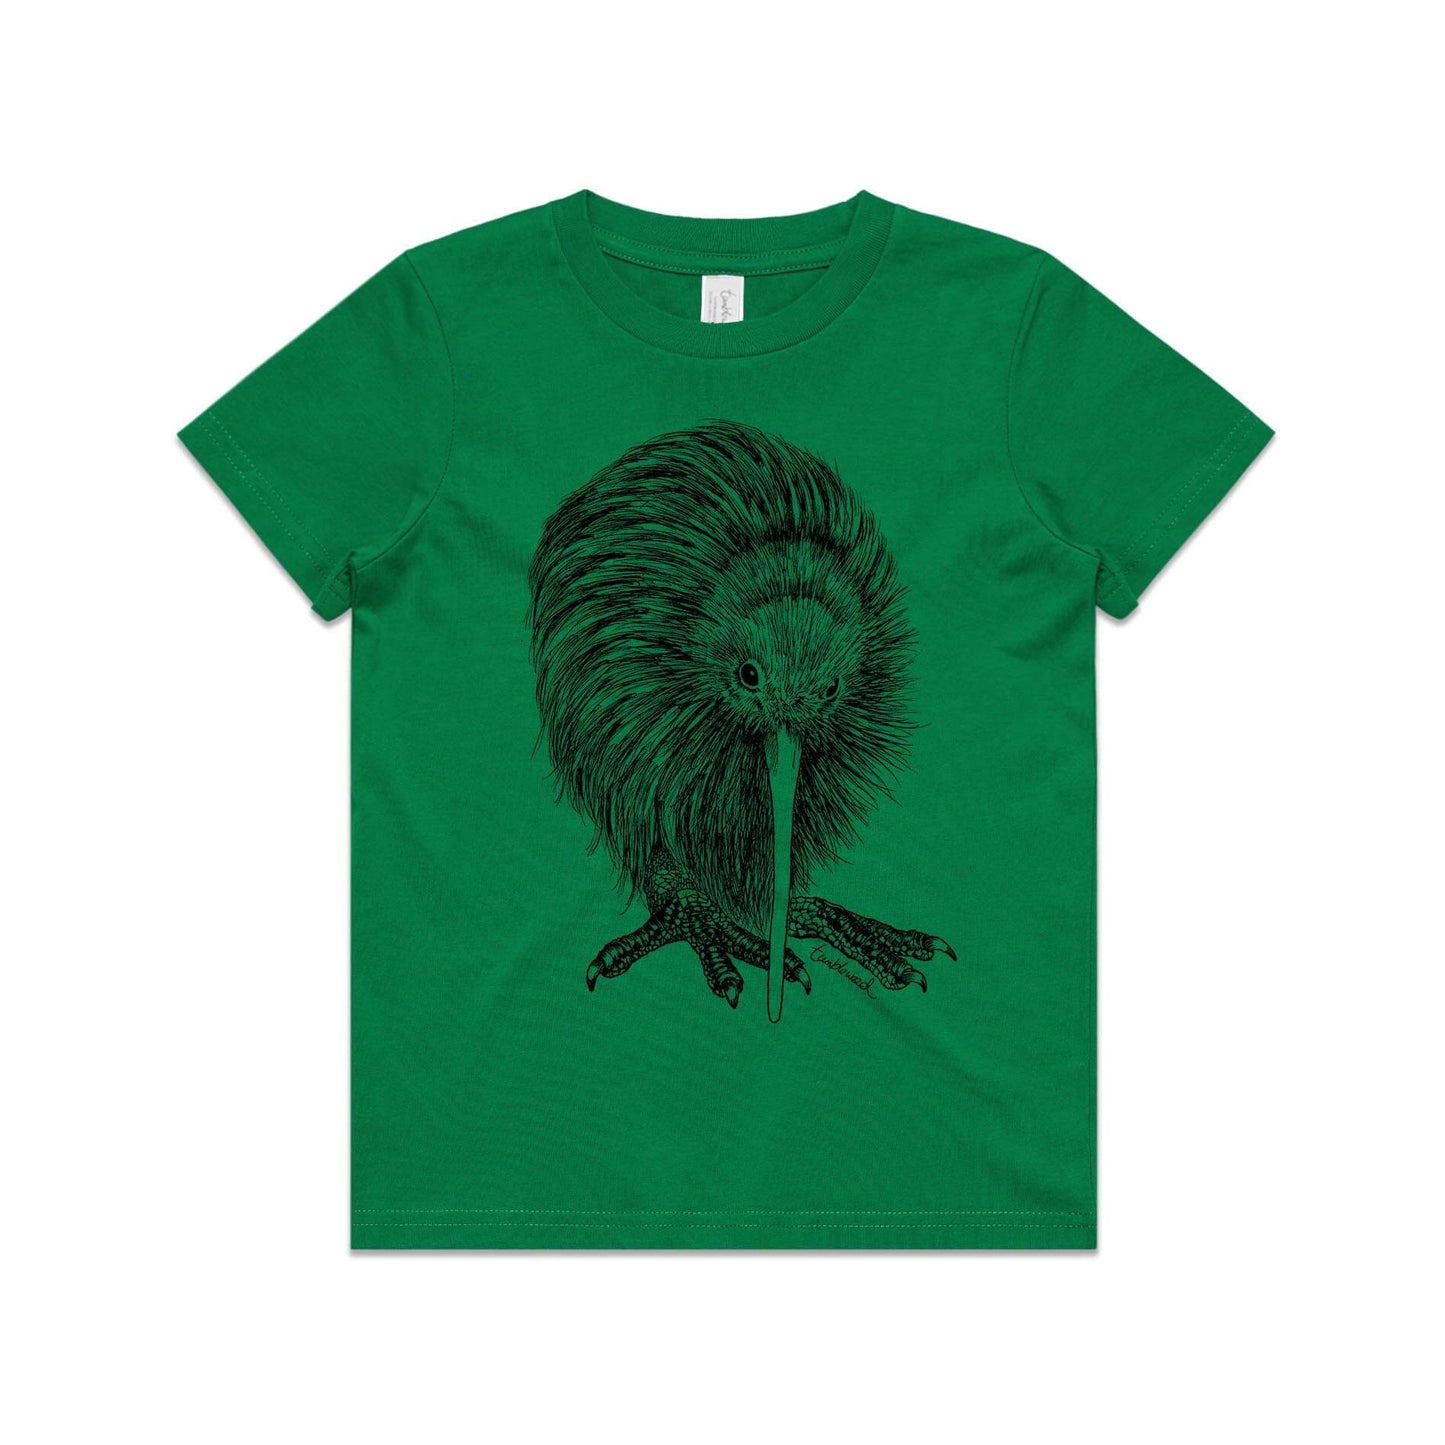 Green, cotton kids' t-shirt with screen printed Kids kiwi design.